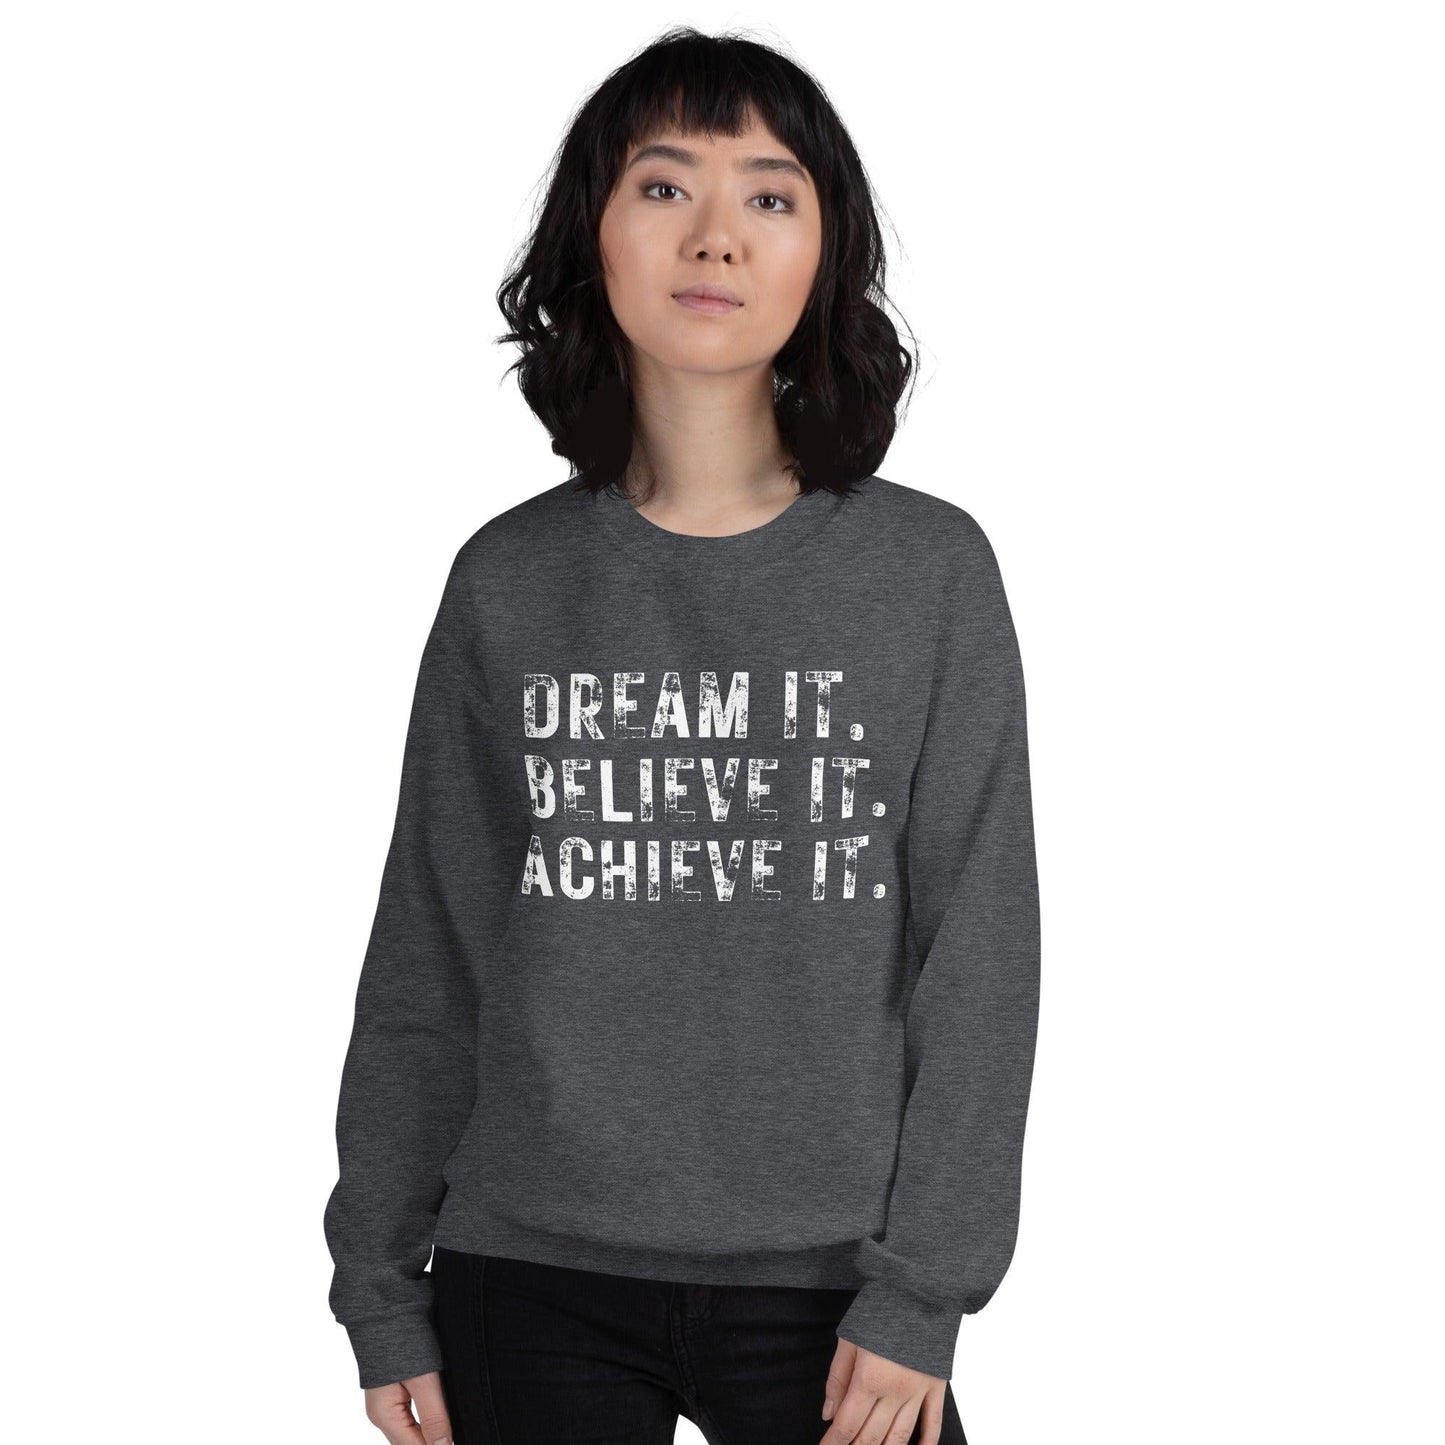 Essential Crew Sweatshirt - Dream it. Believe it. Achieve it.